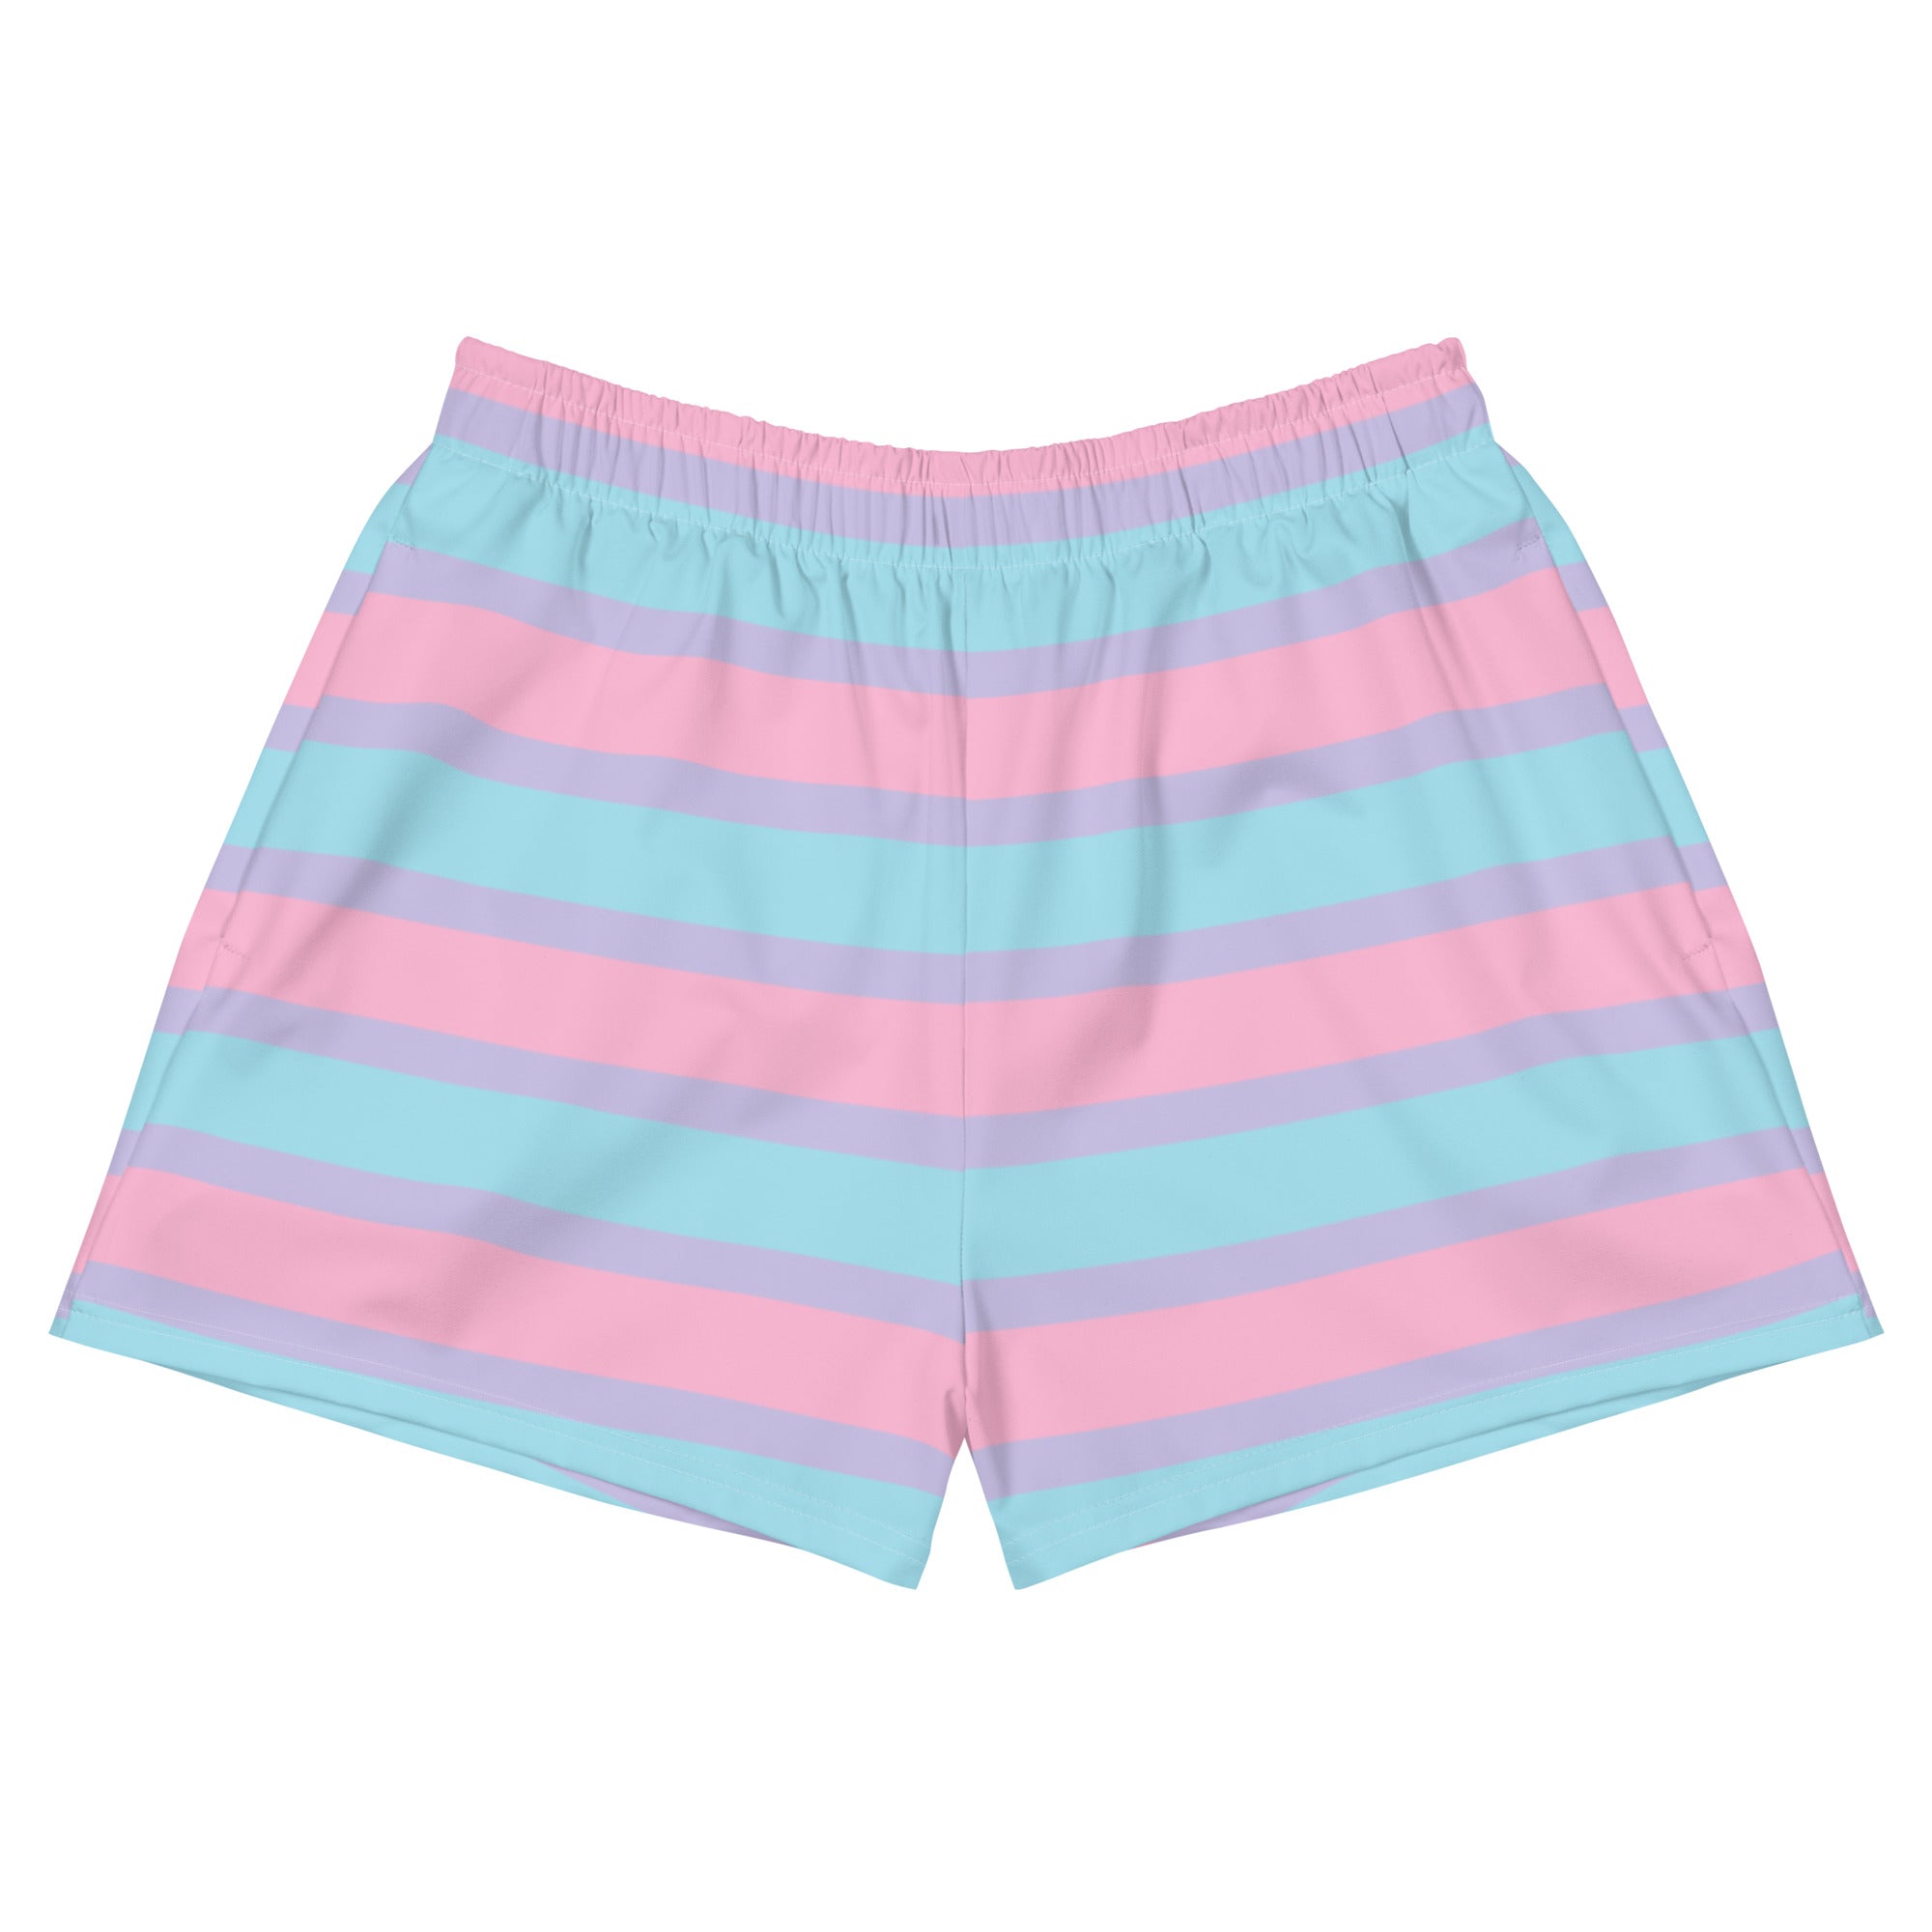 Pastel Bisexual Athletic Shorts